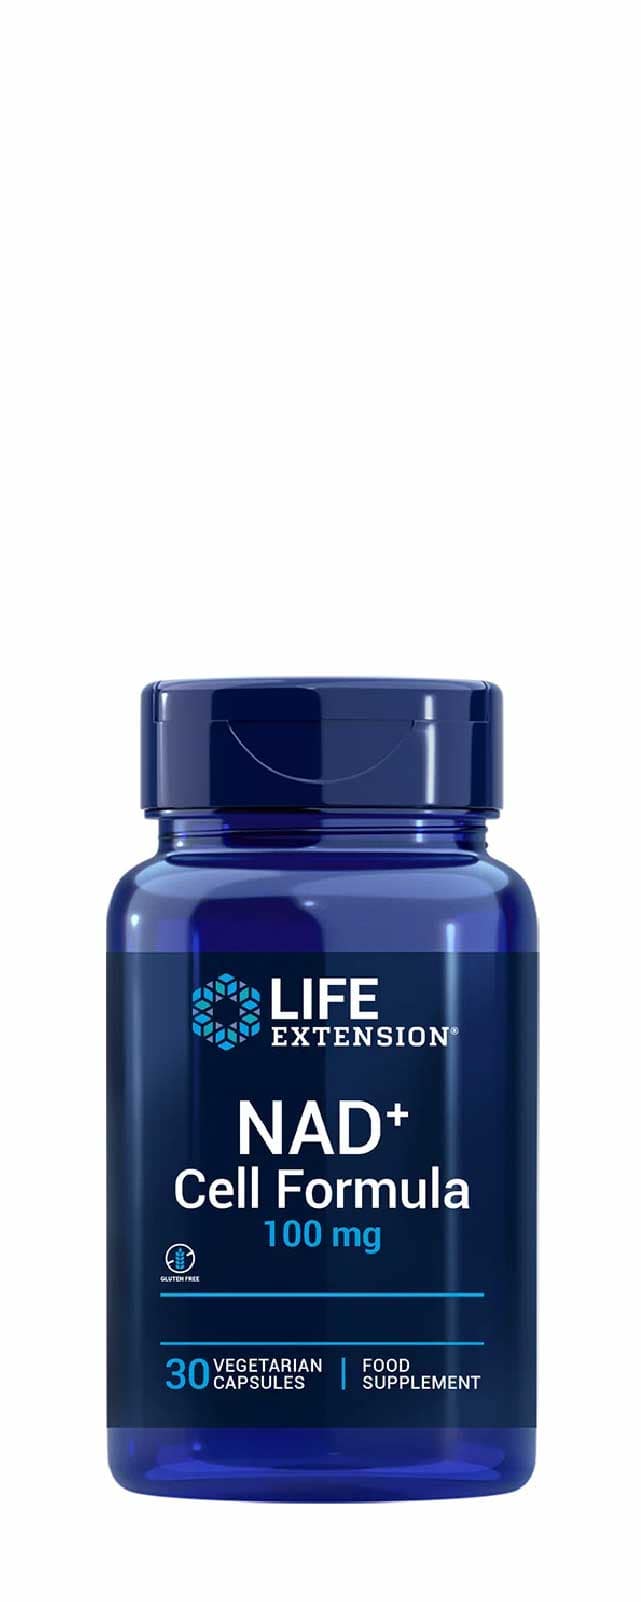 Buy Life Extension NAD+ Cell Formula, 100 mg at LiveHelfi